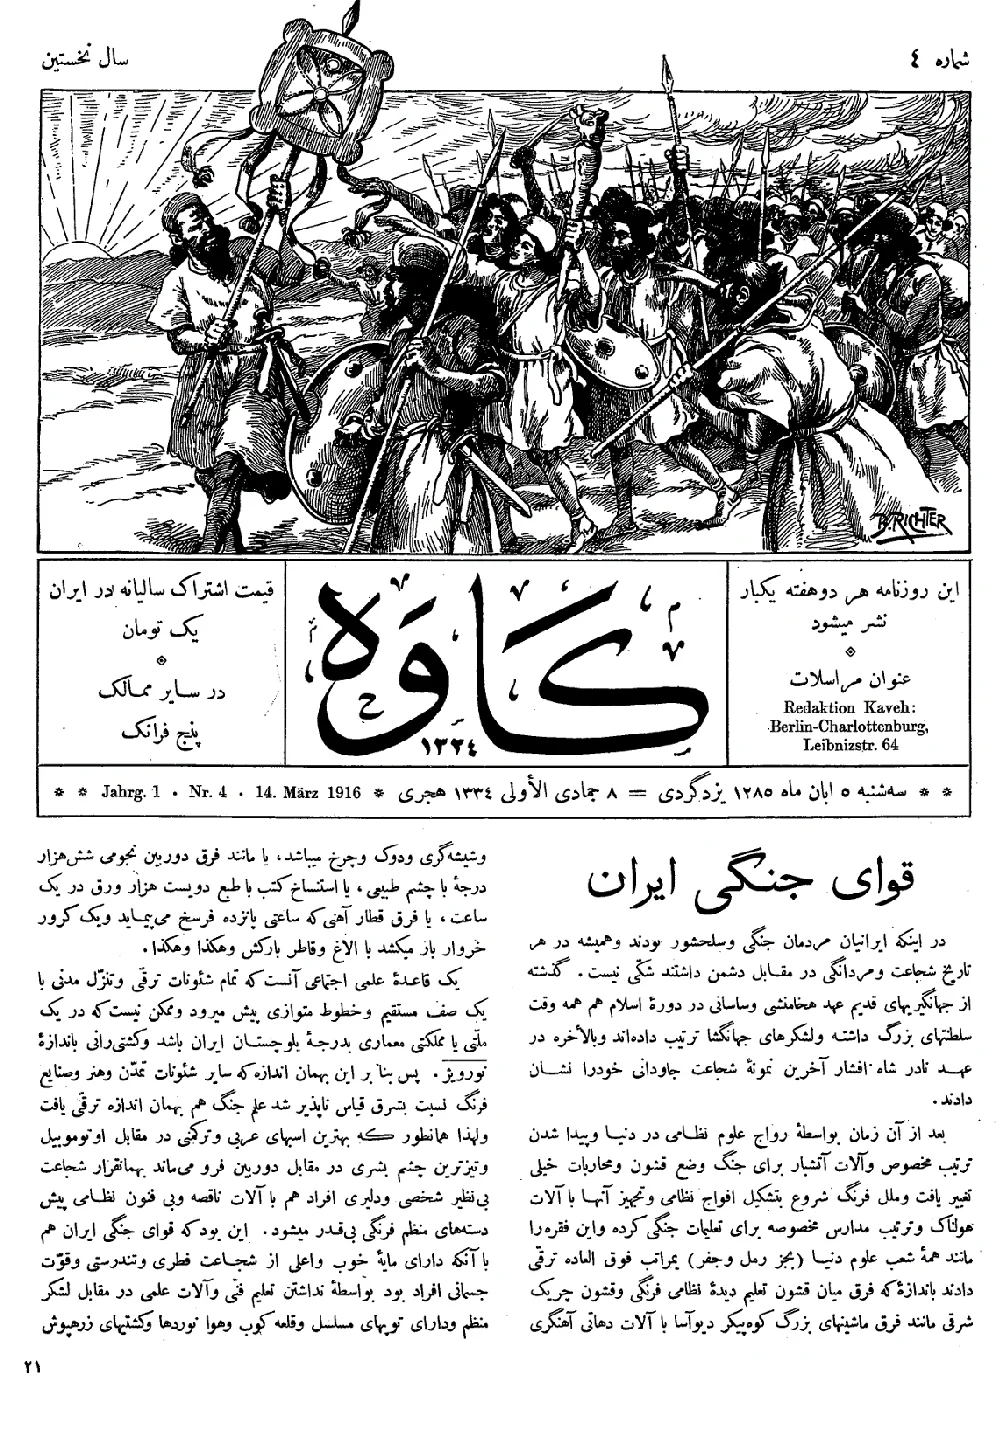 مجله کاوه - شماره ۴ - ۵ آبان ۱۲۸۵